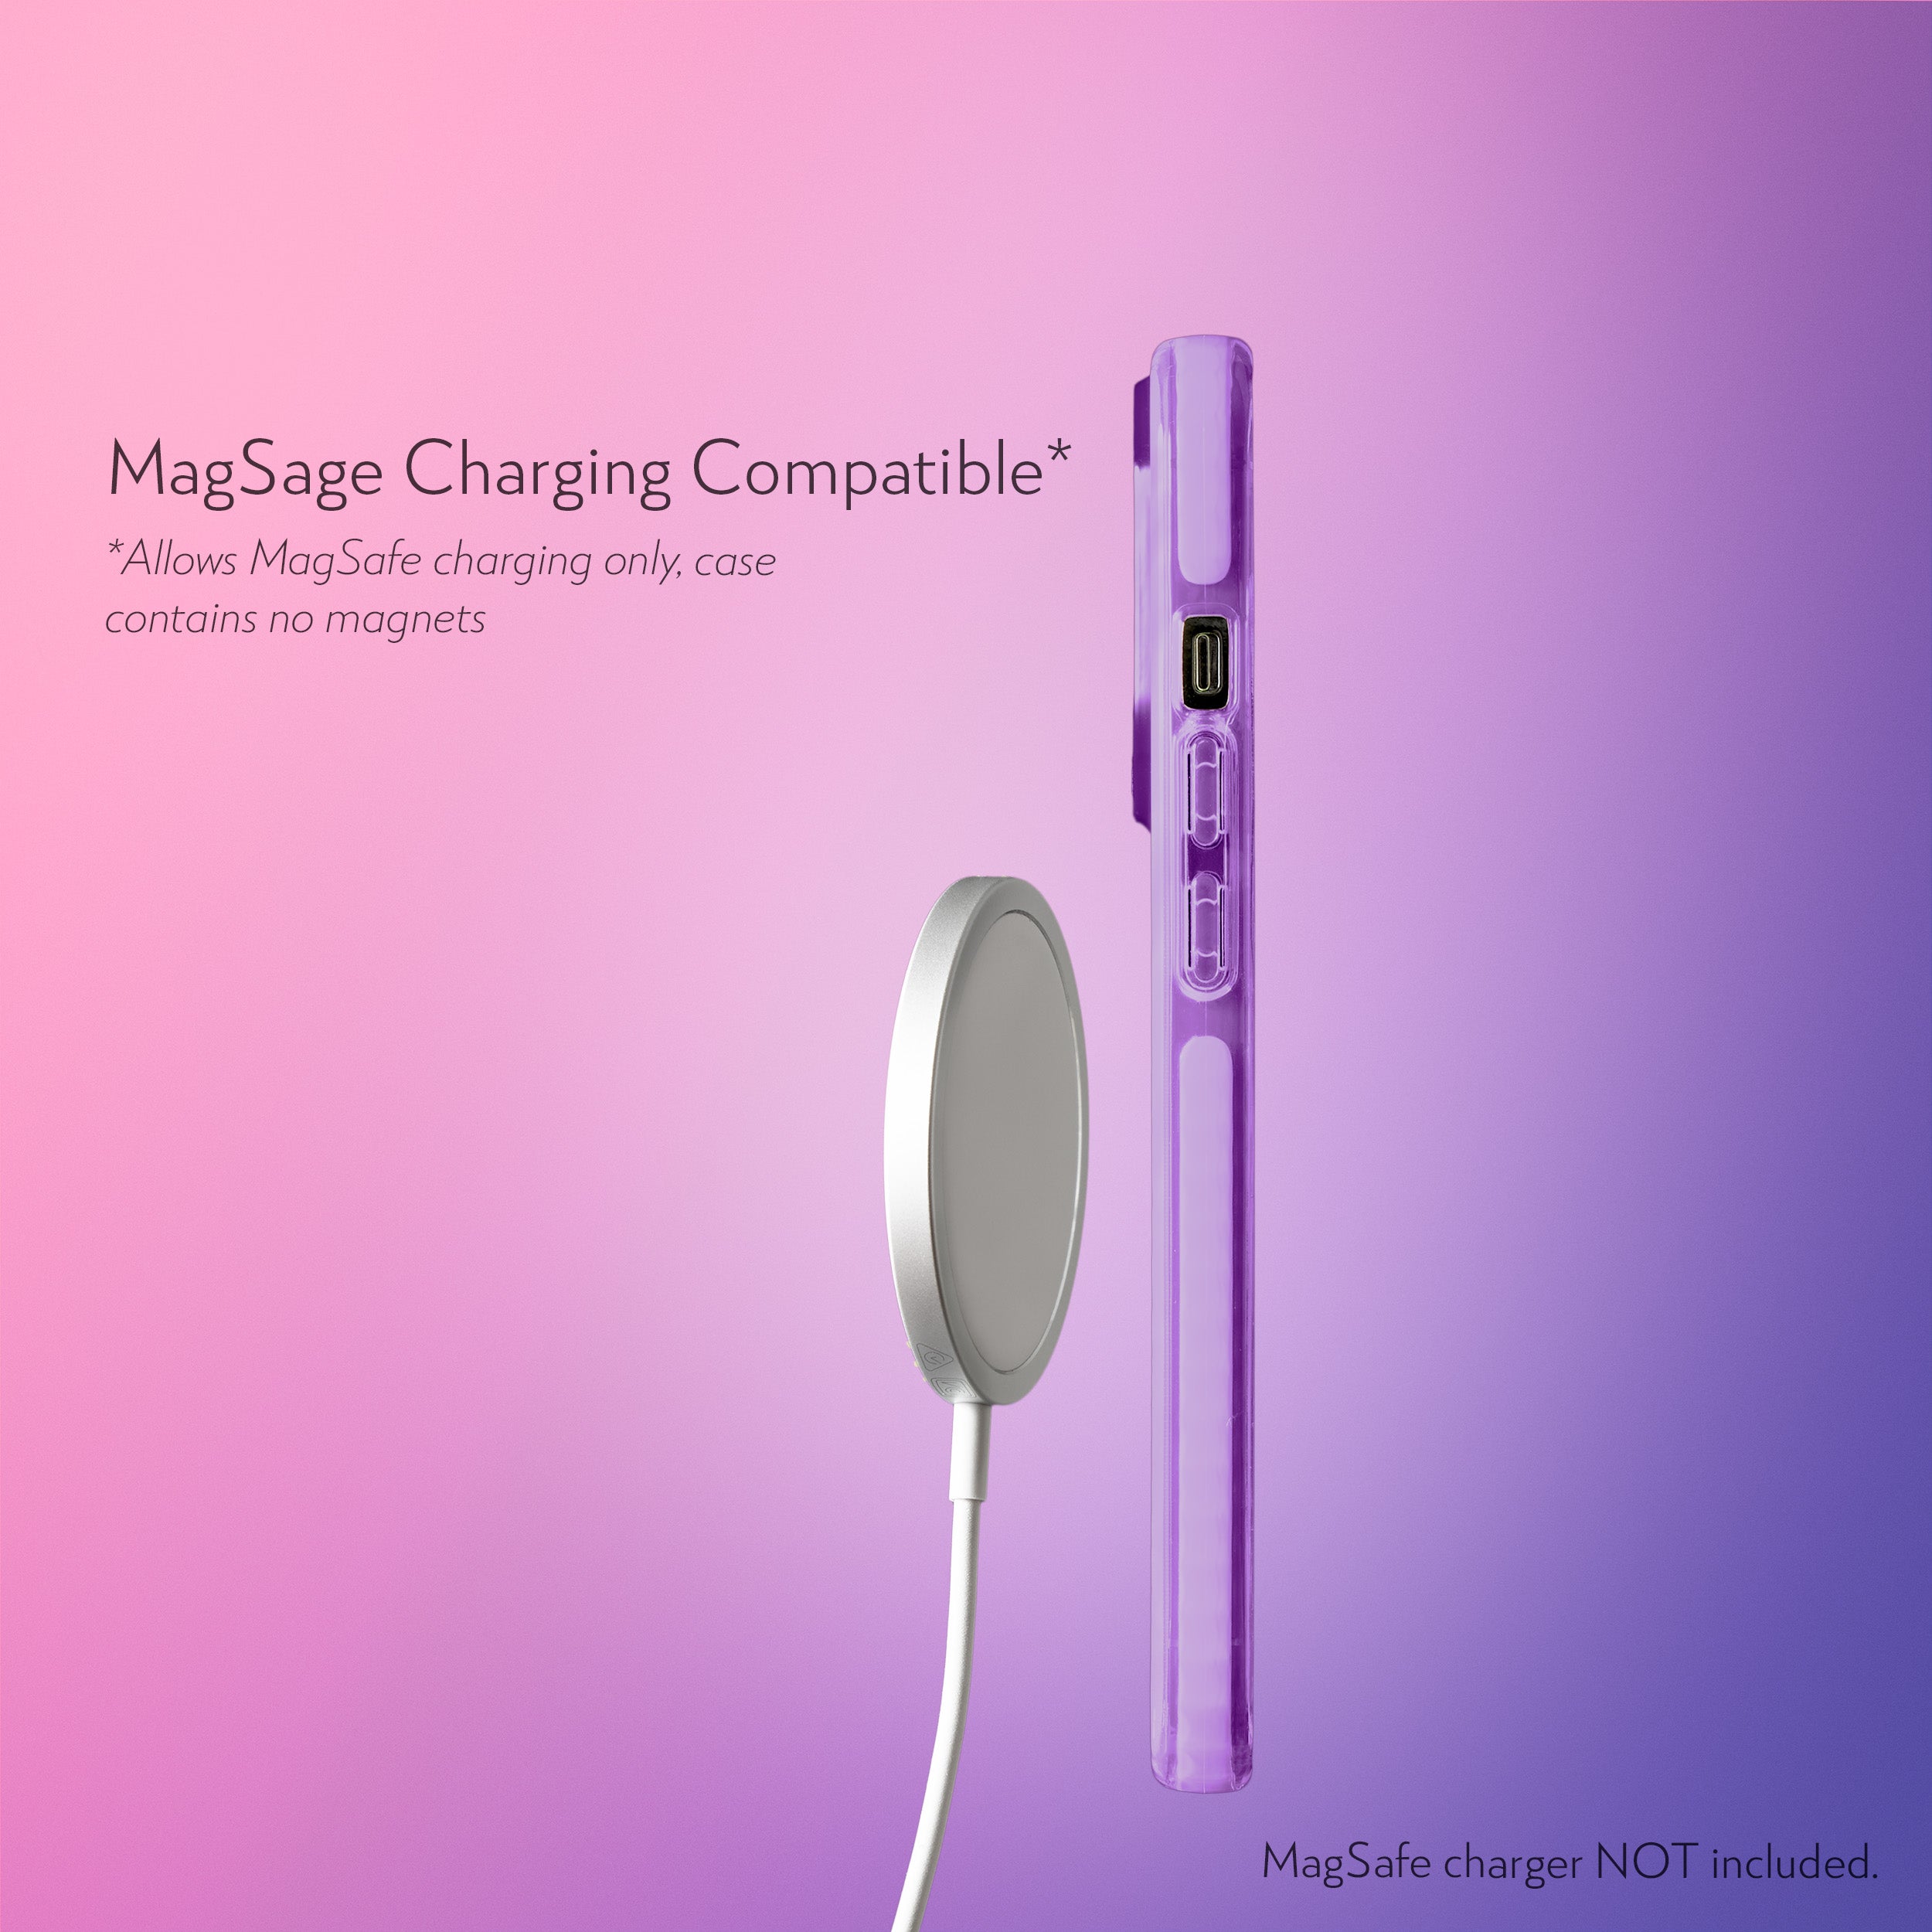 Barrier Case for iPhone 14 Pro - Fresh Purple Lavender